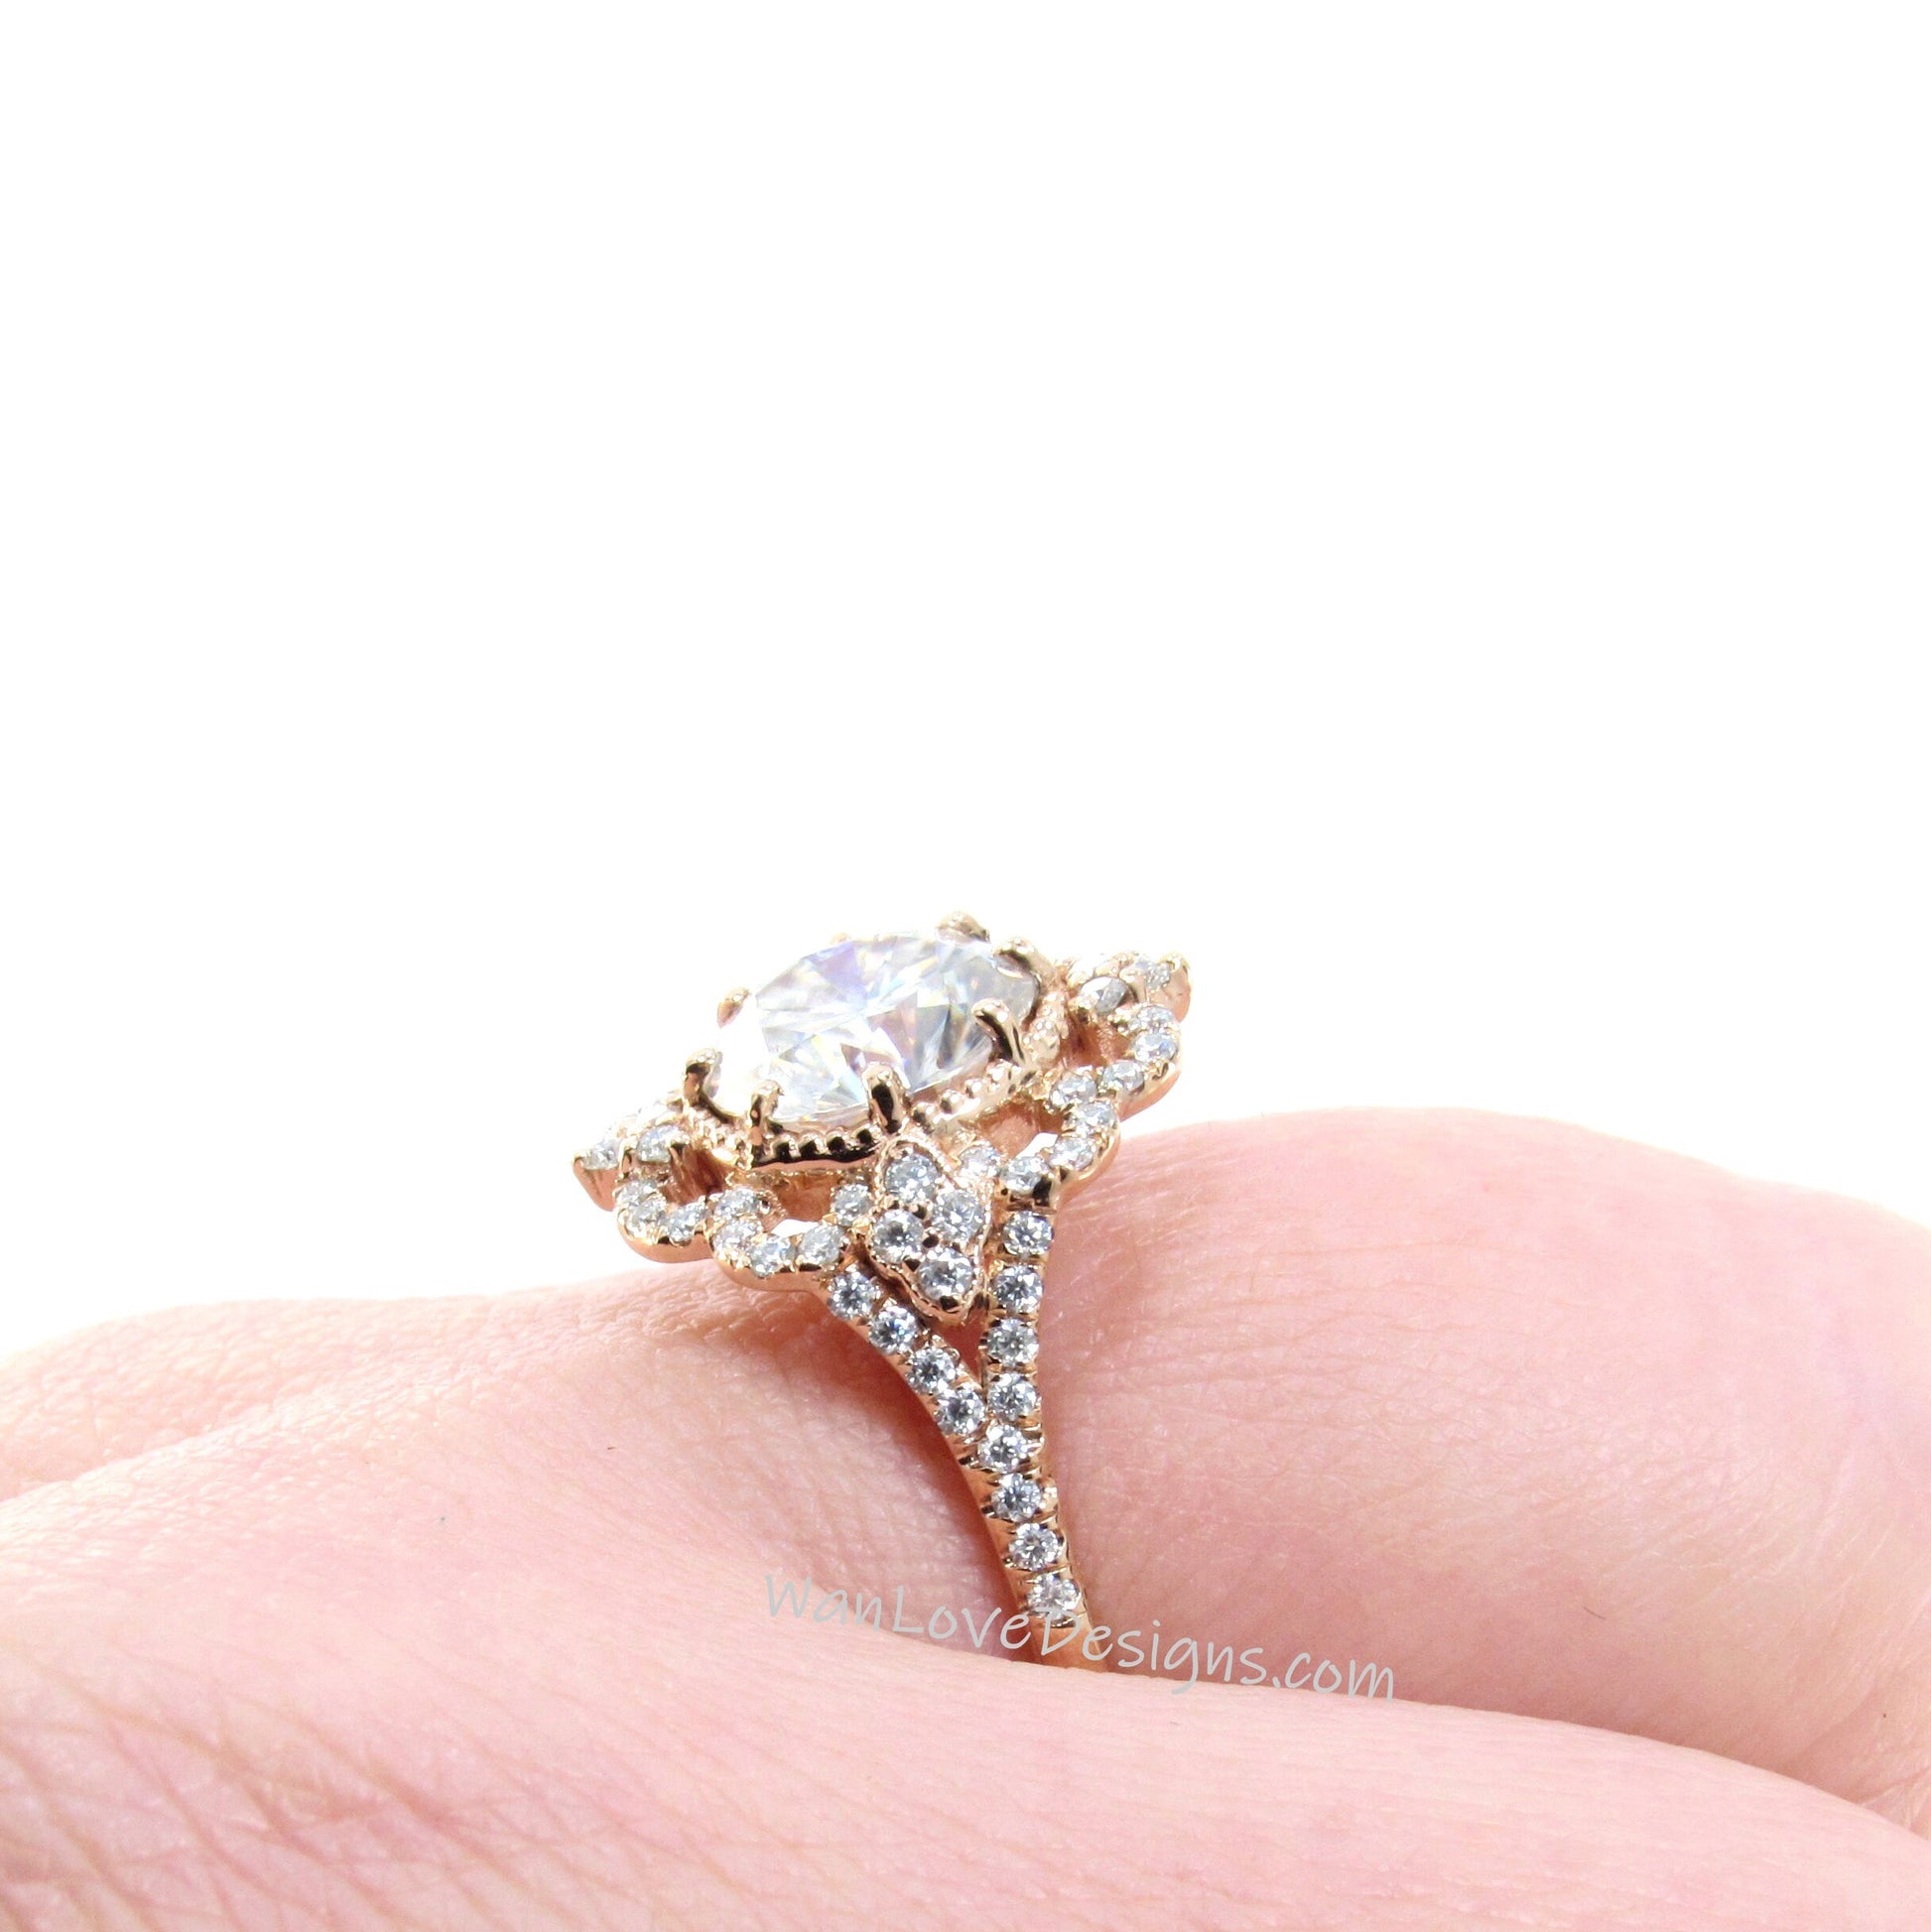 Vintage round shape Blue Sapphire engagement ring ornate halo moissanite diamond ring rose gold ring 8 prong set ring anniversary ring gift